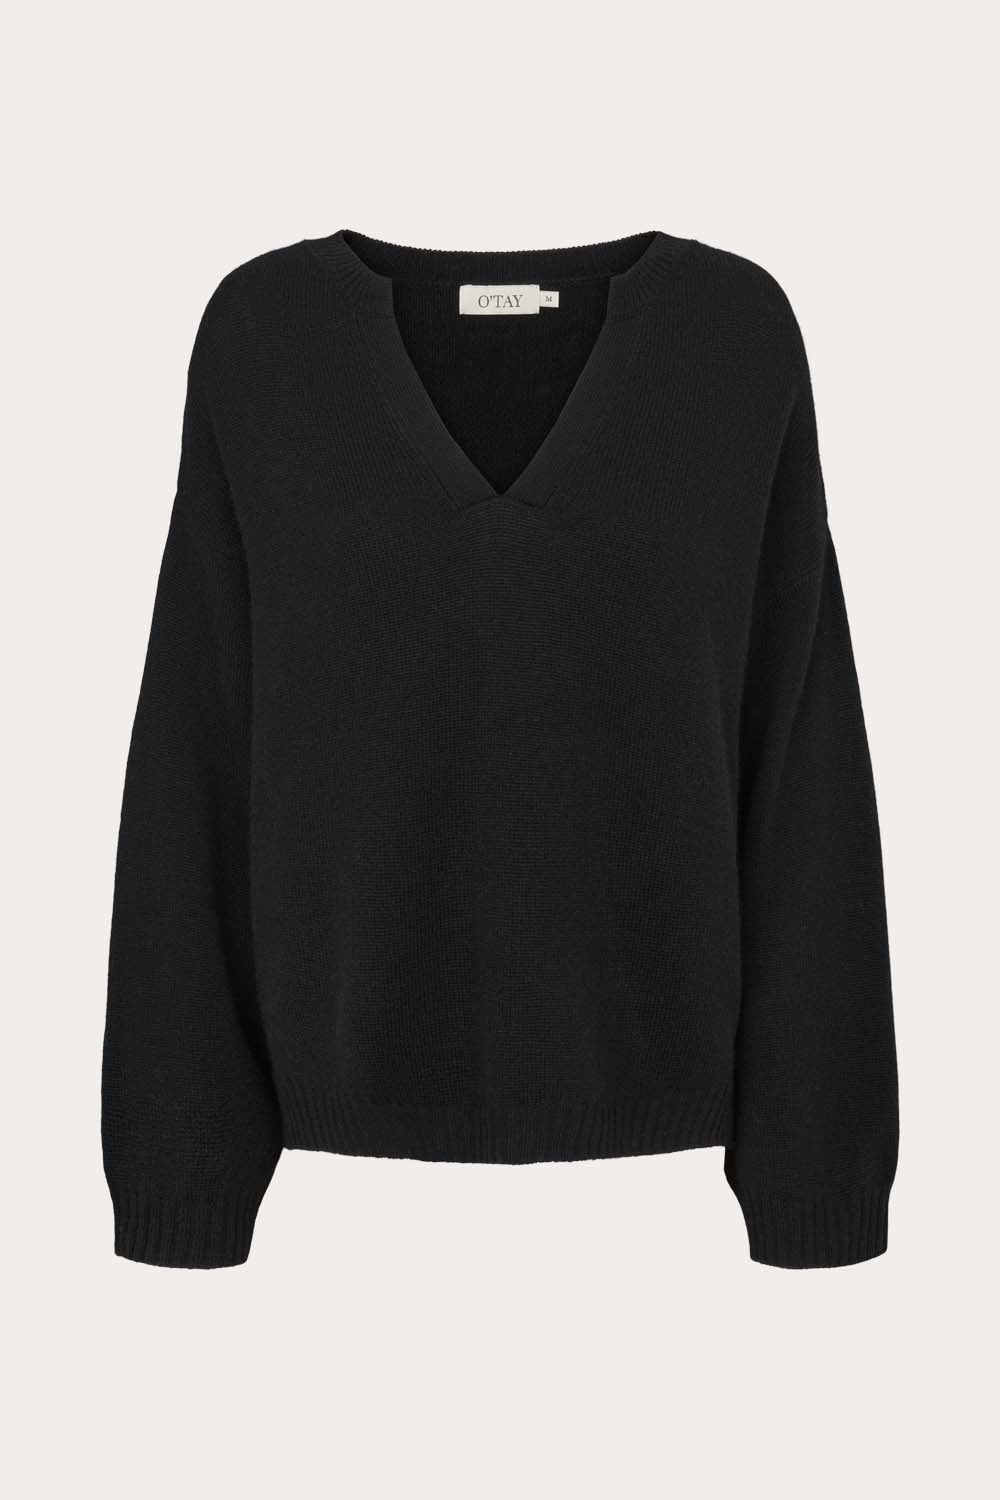 O'TAY Donna Sweater Bluser Black